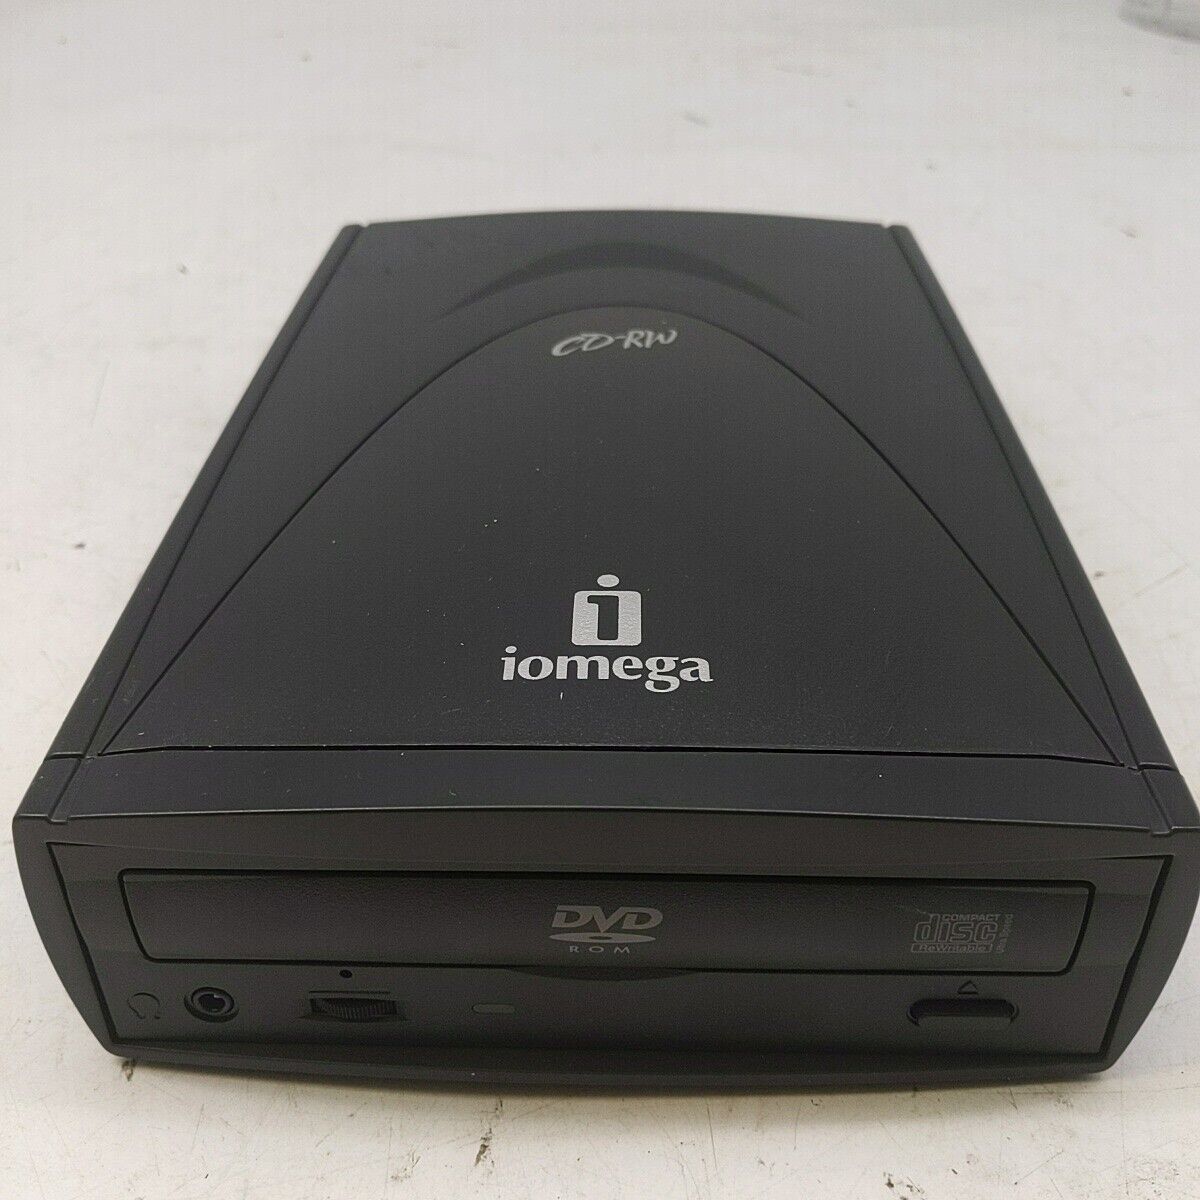 Iomega CD/RW DVD-ROM External Disk Drive-Untested